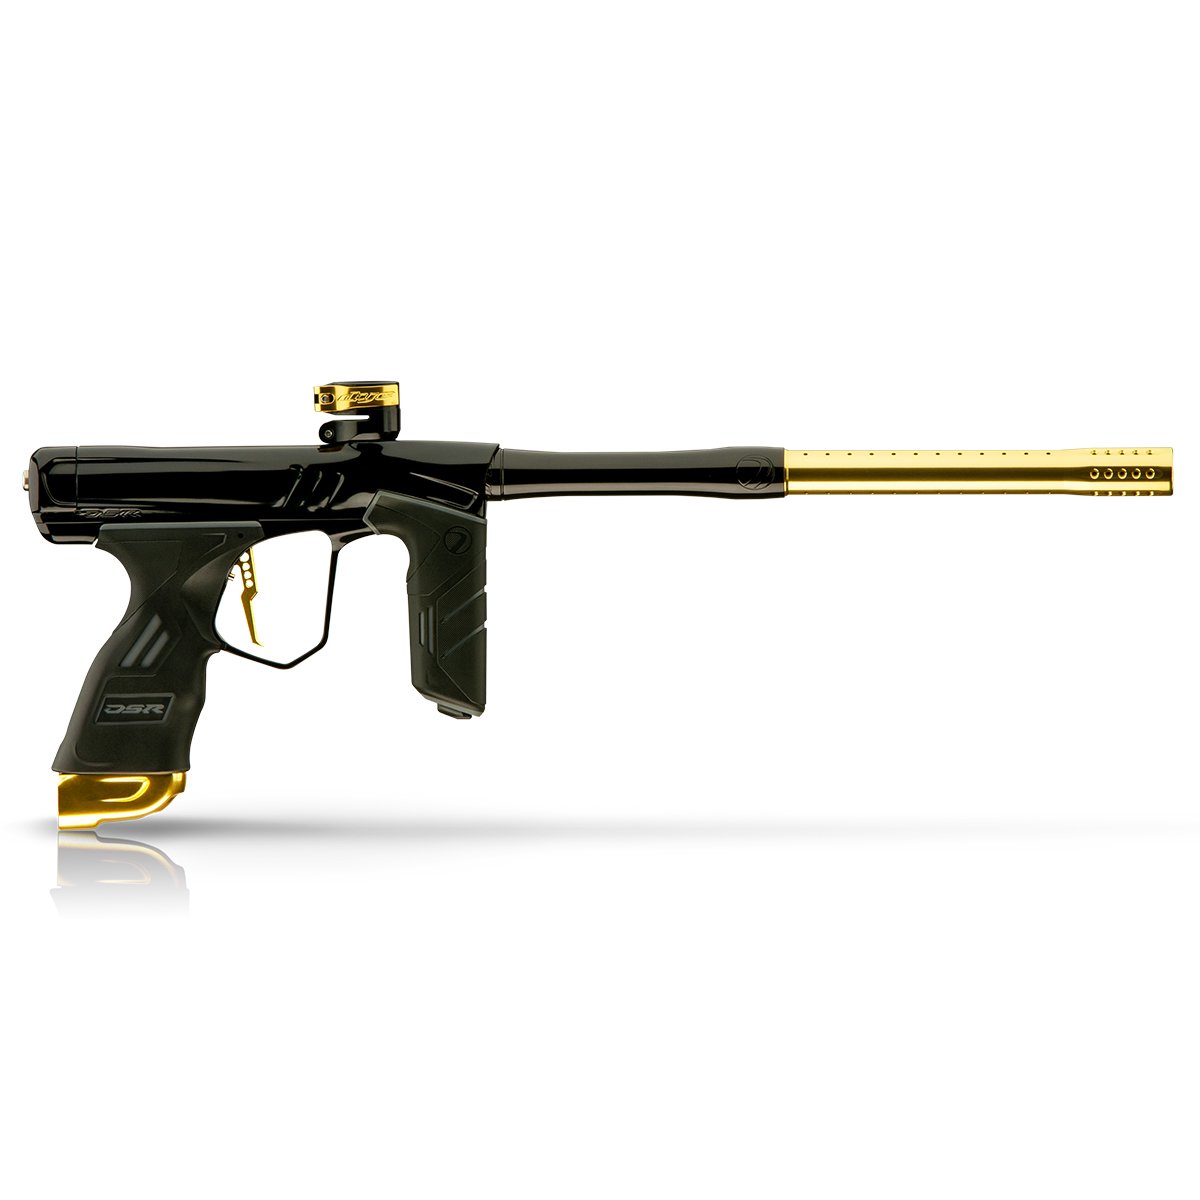 Dye DSR+ Paintball Gun - Onyx Gold (Polished Black/Polished Gold)